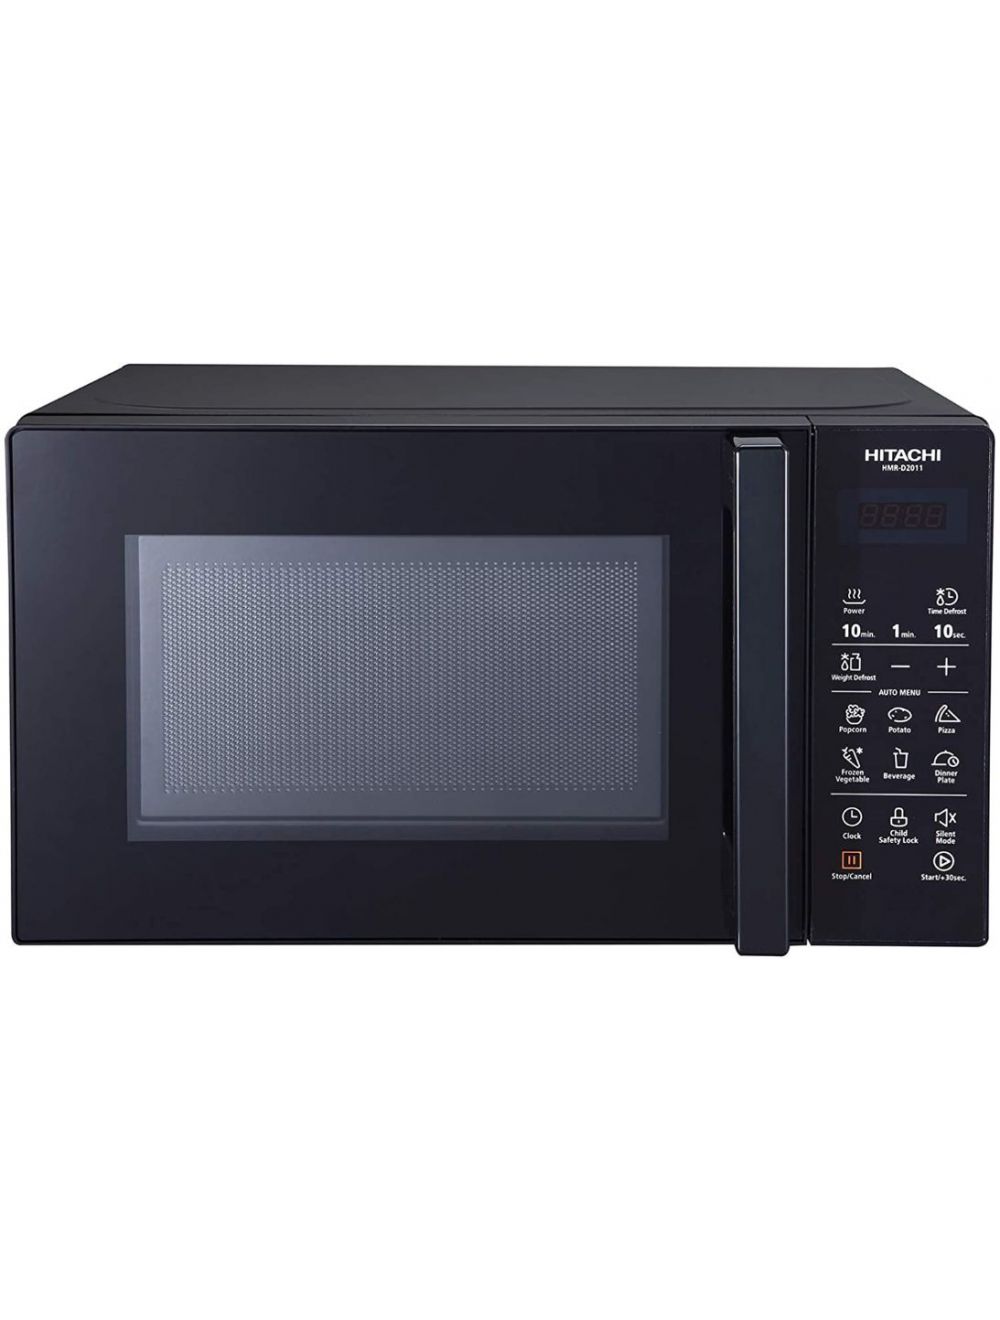 Hitachi 20 Litres Microwave Oven Touch Panel Control, Black-HMRD2011